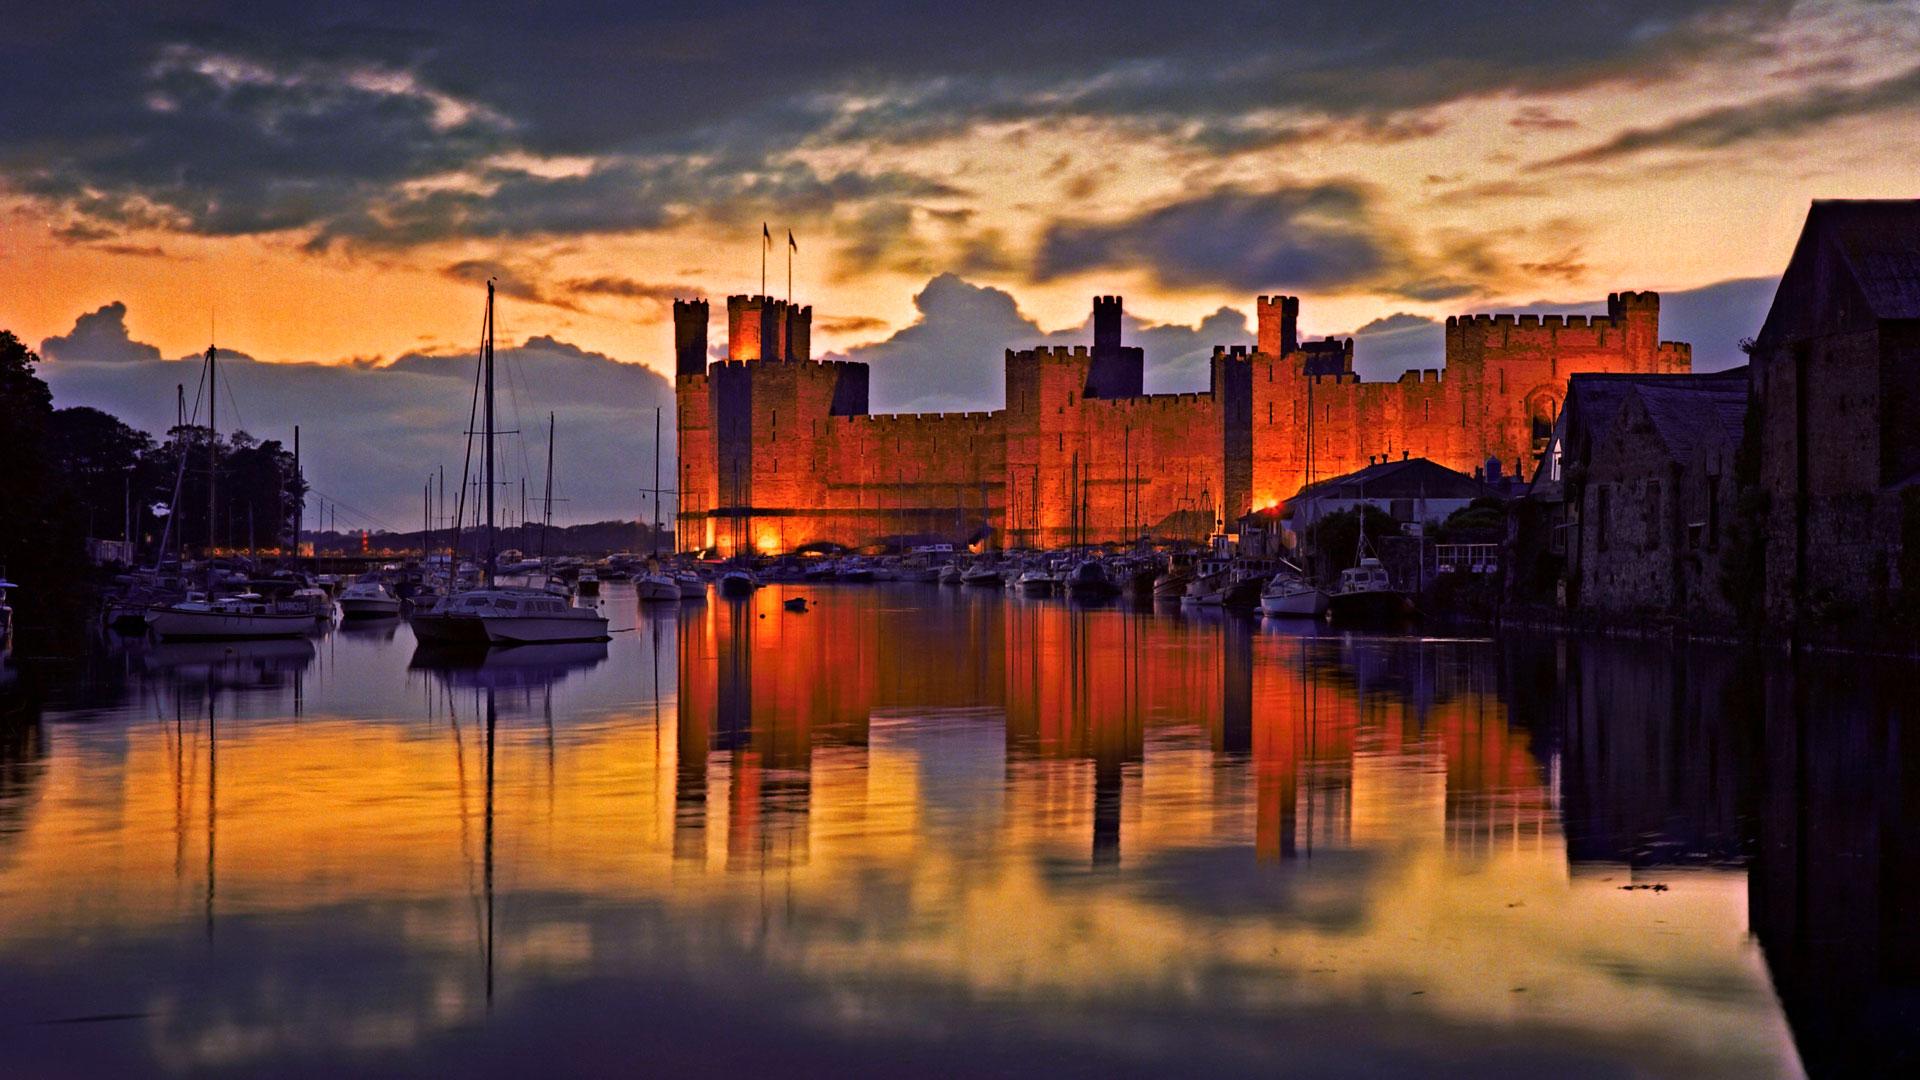 Castell Caernarfon / Caernarfon Castle night time reflection on water